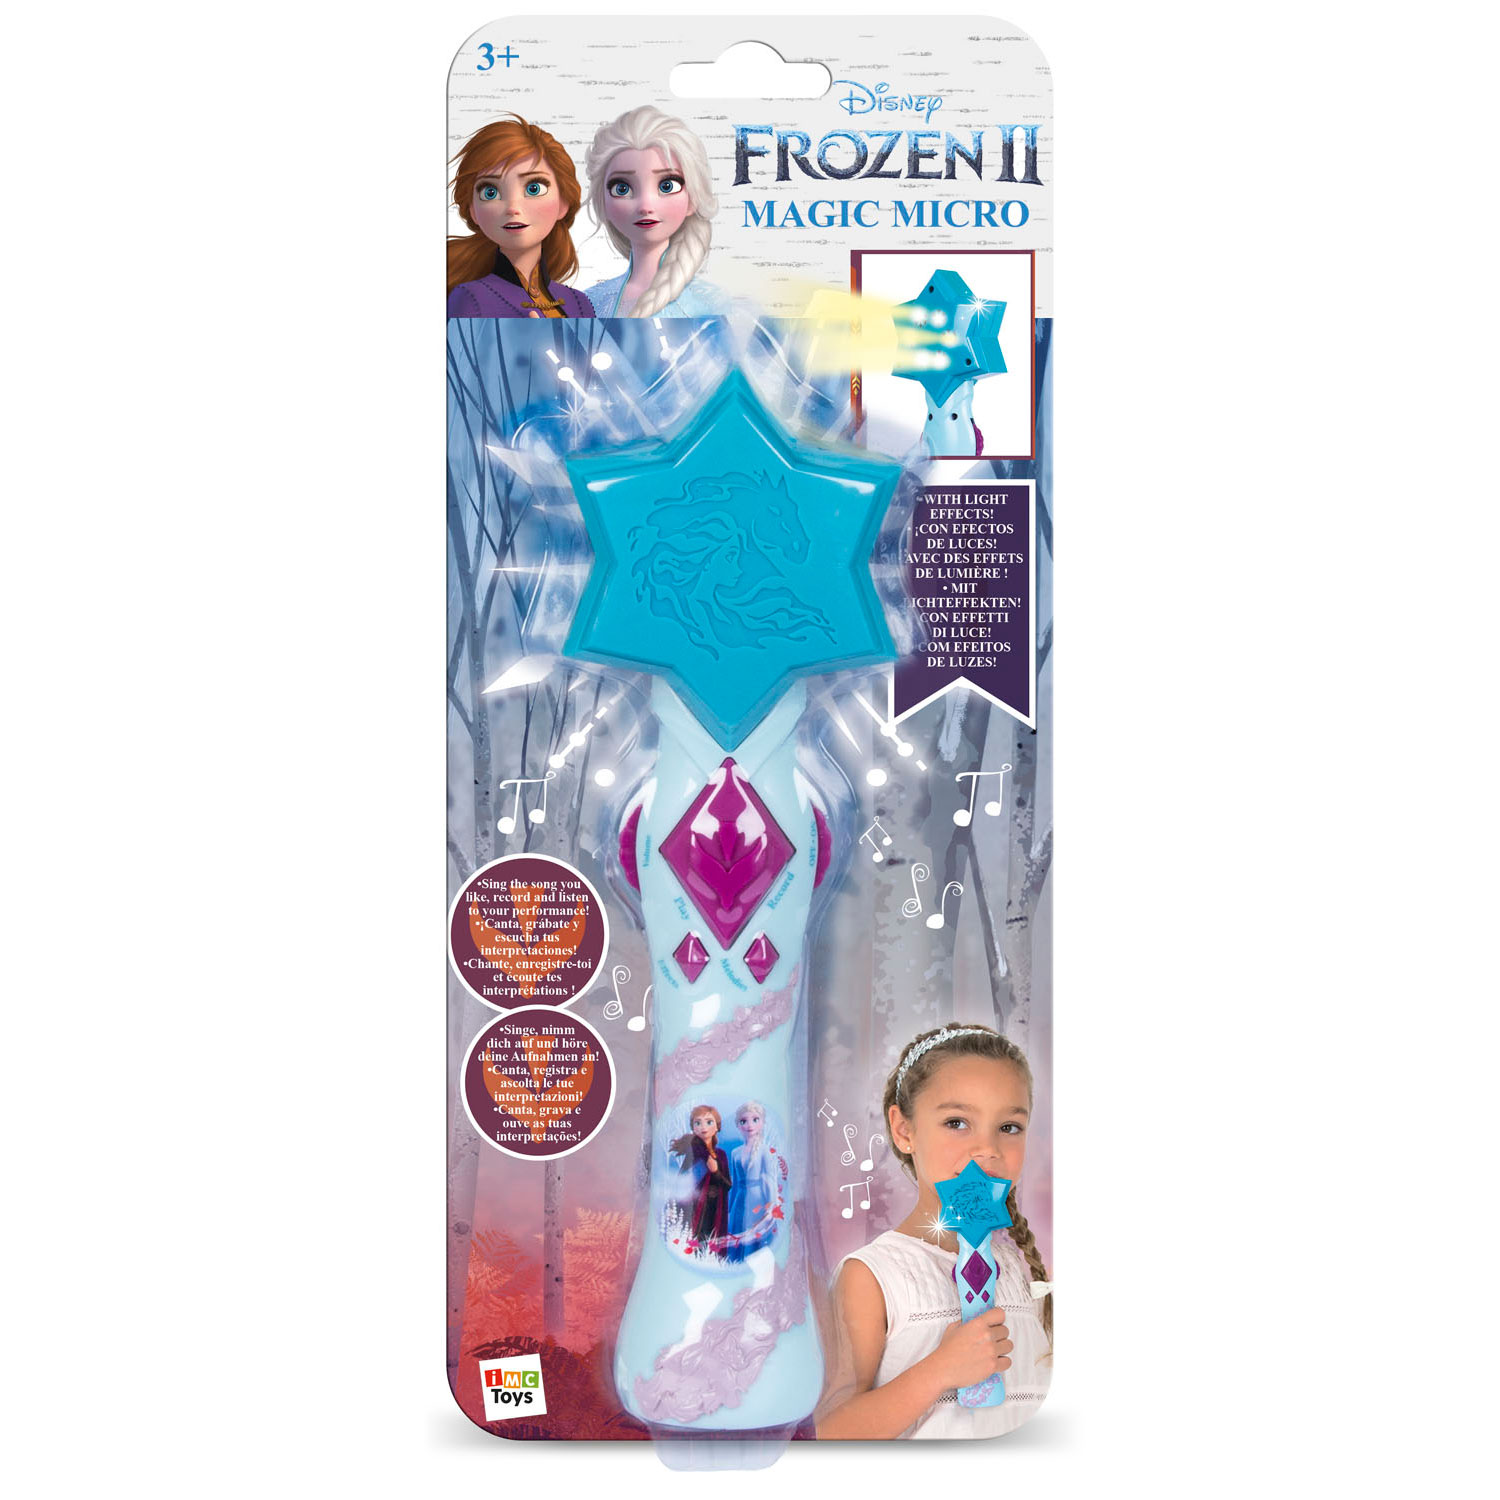 Frozen 2 Magic Light Microrecorder